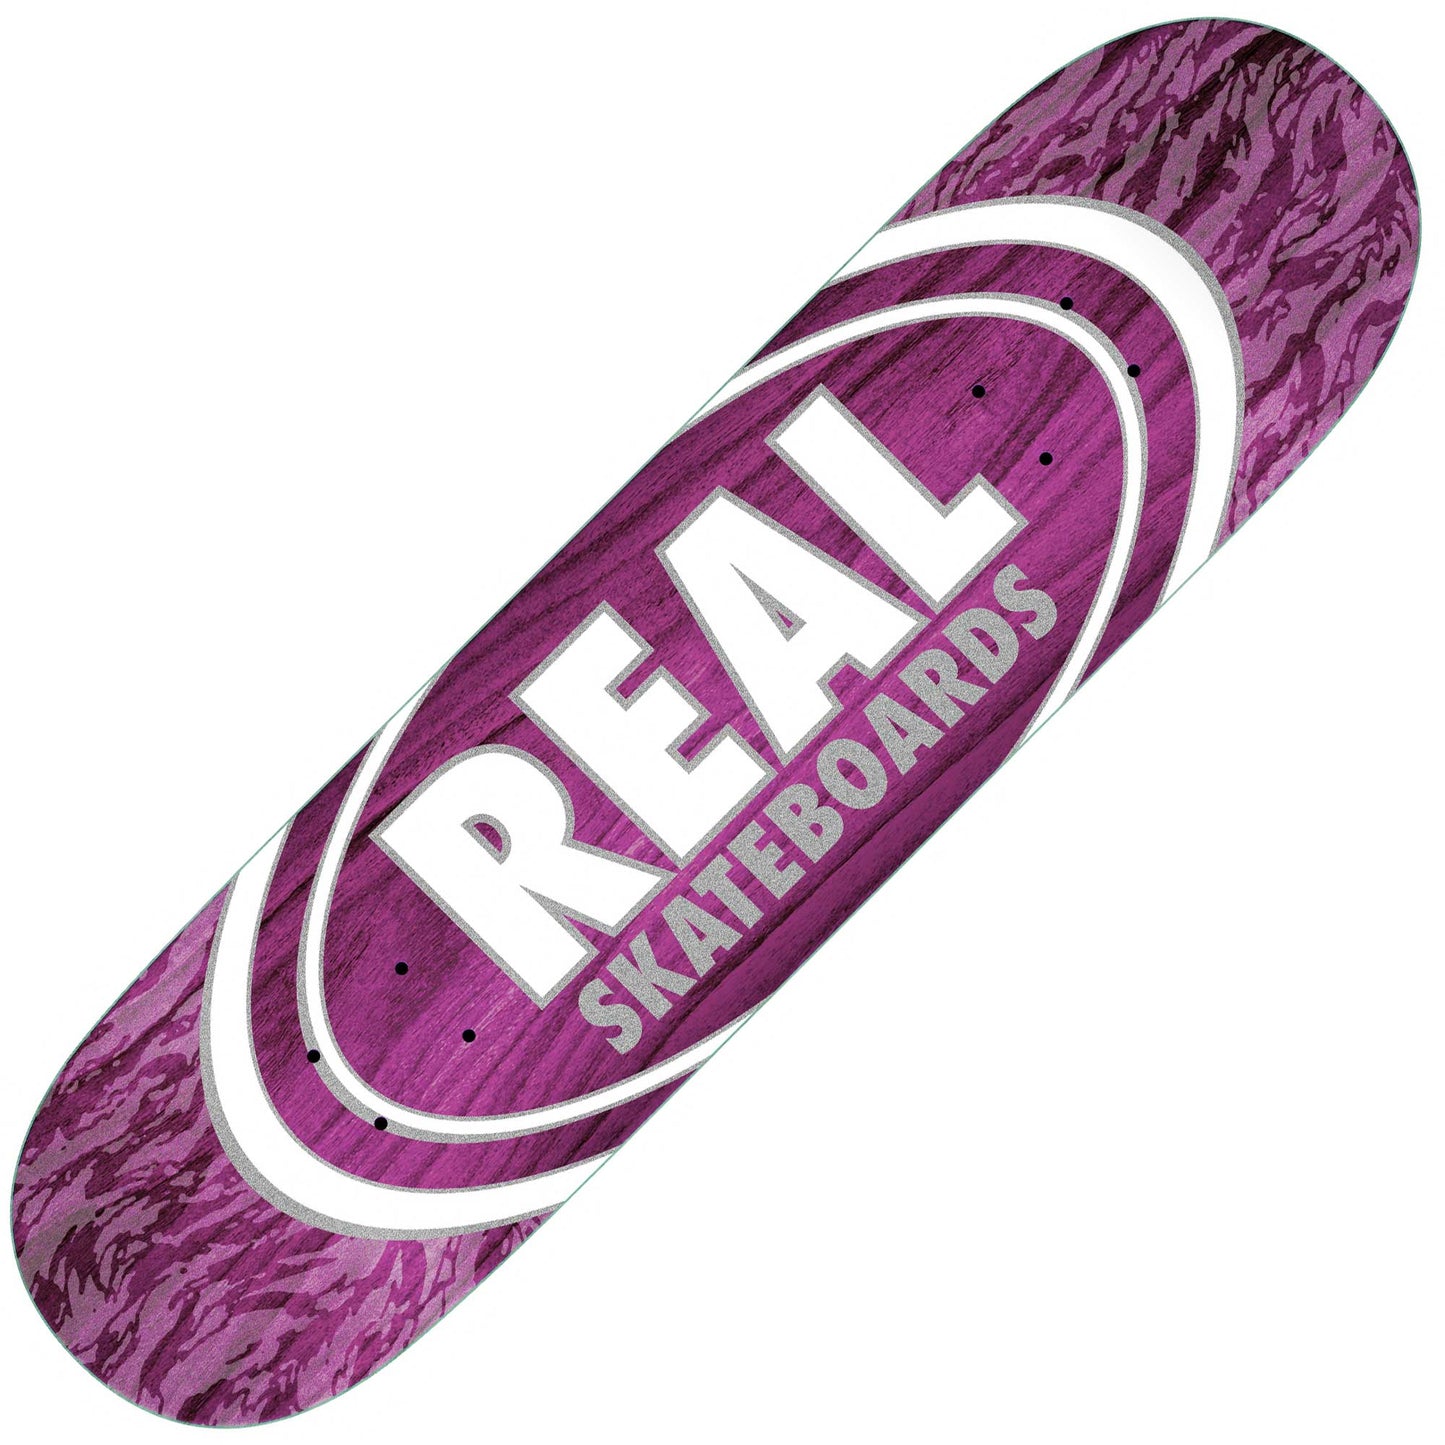 Real Oval Patterns Team series deck (8.06") - Tiki Room Skateboards - 1